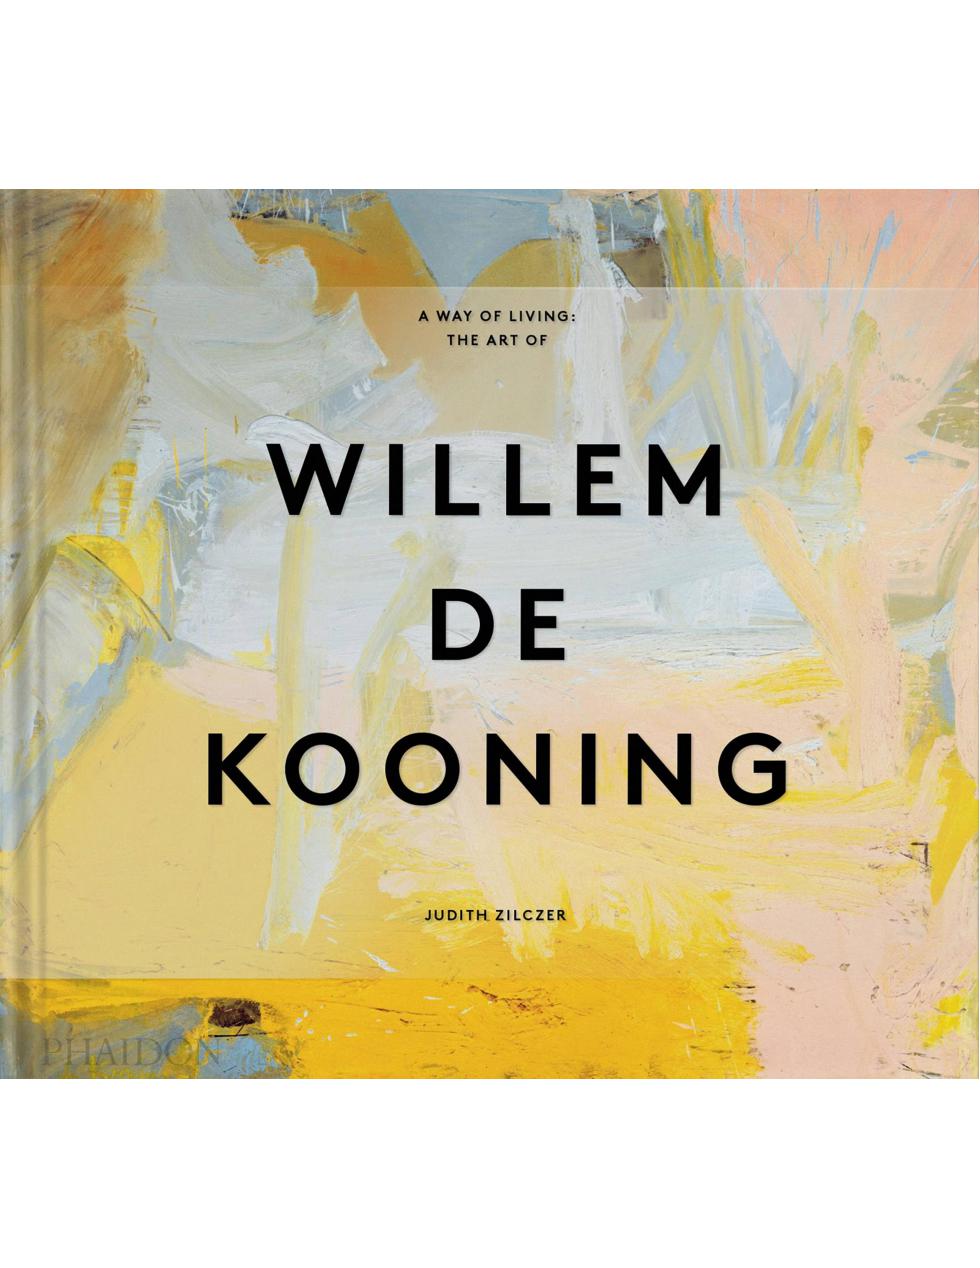 Book : De Kooning Willem, A Way Of Living